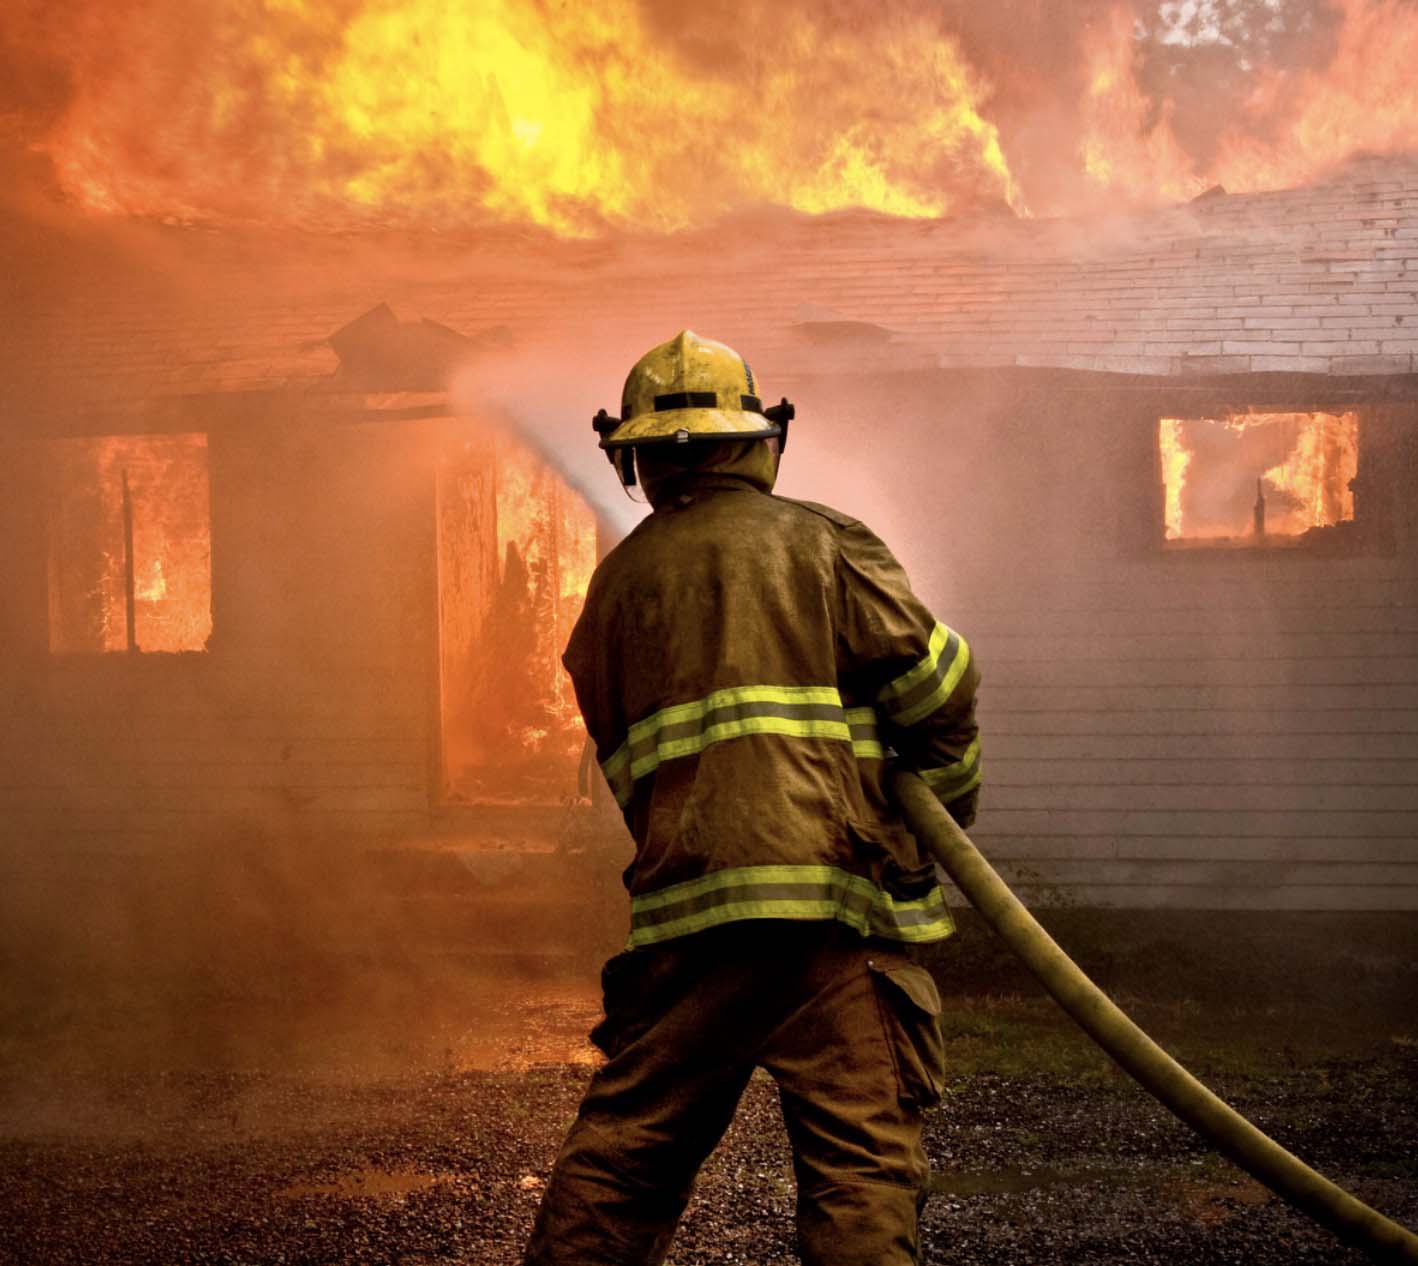 Firefighter dousing a burning home